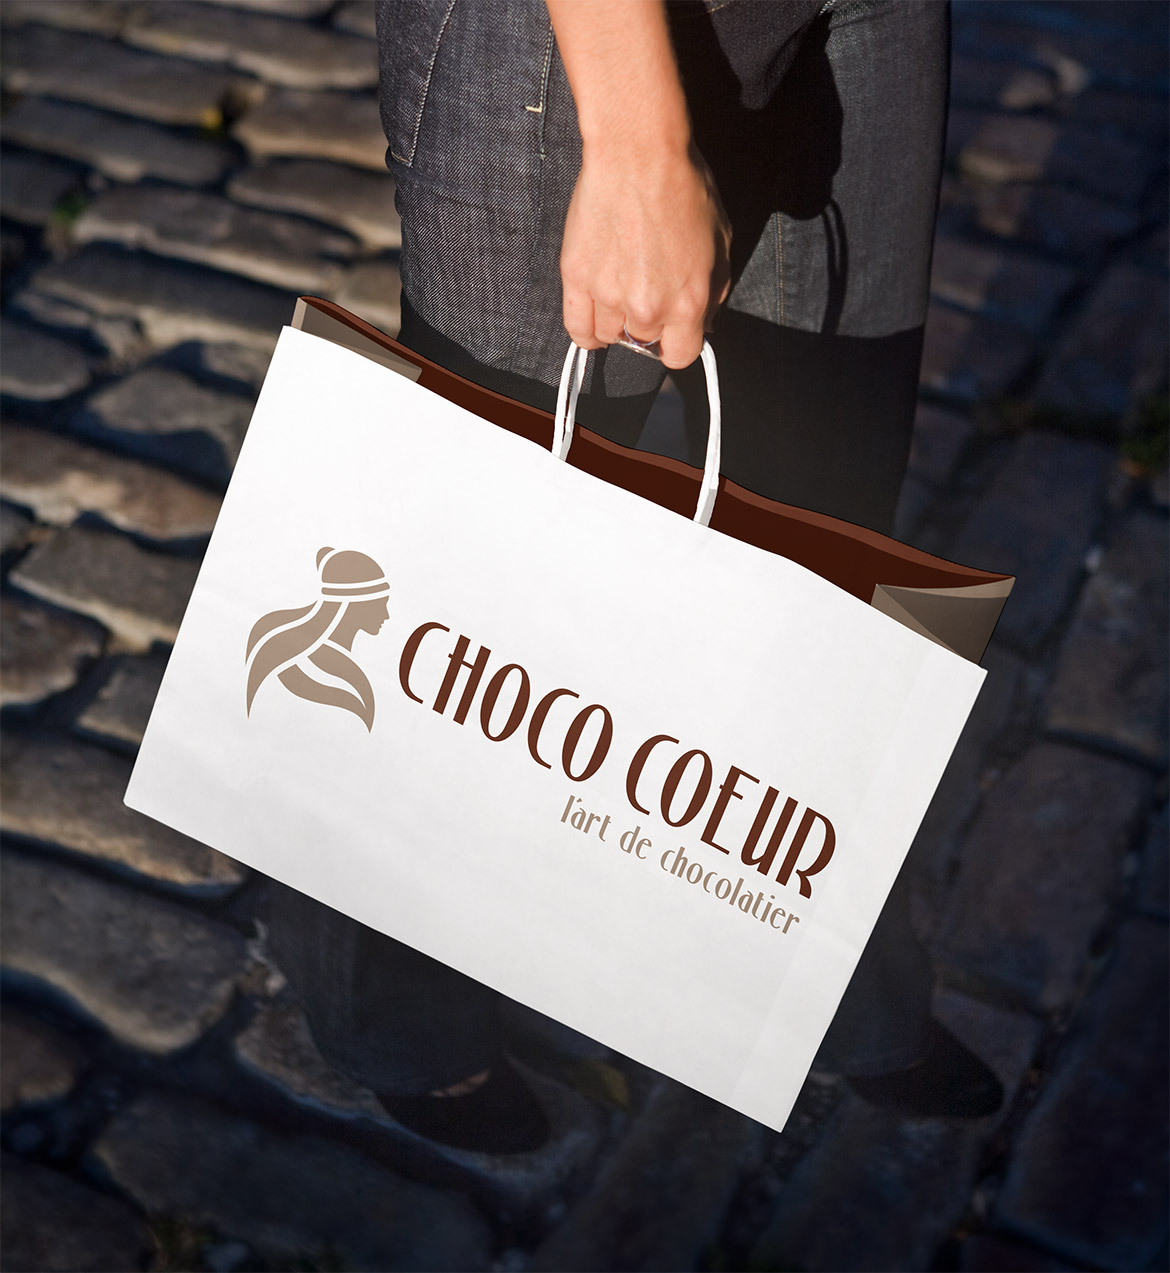 Choco Coeur Logo Design on Bag